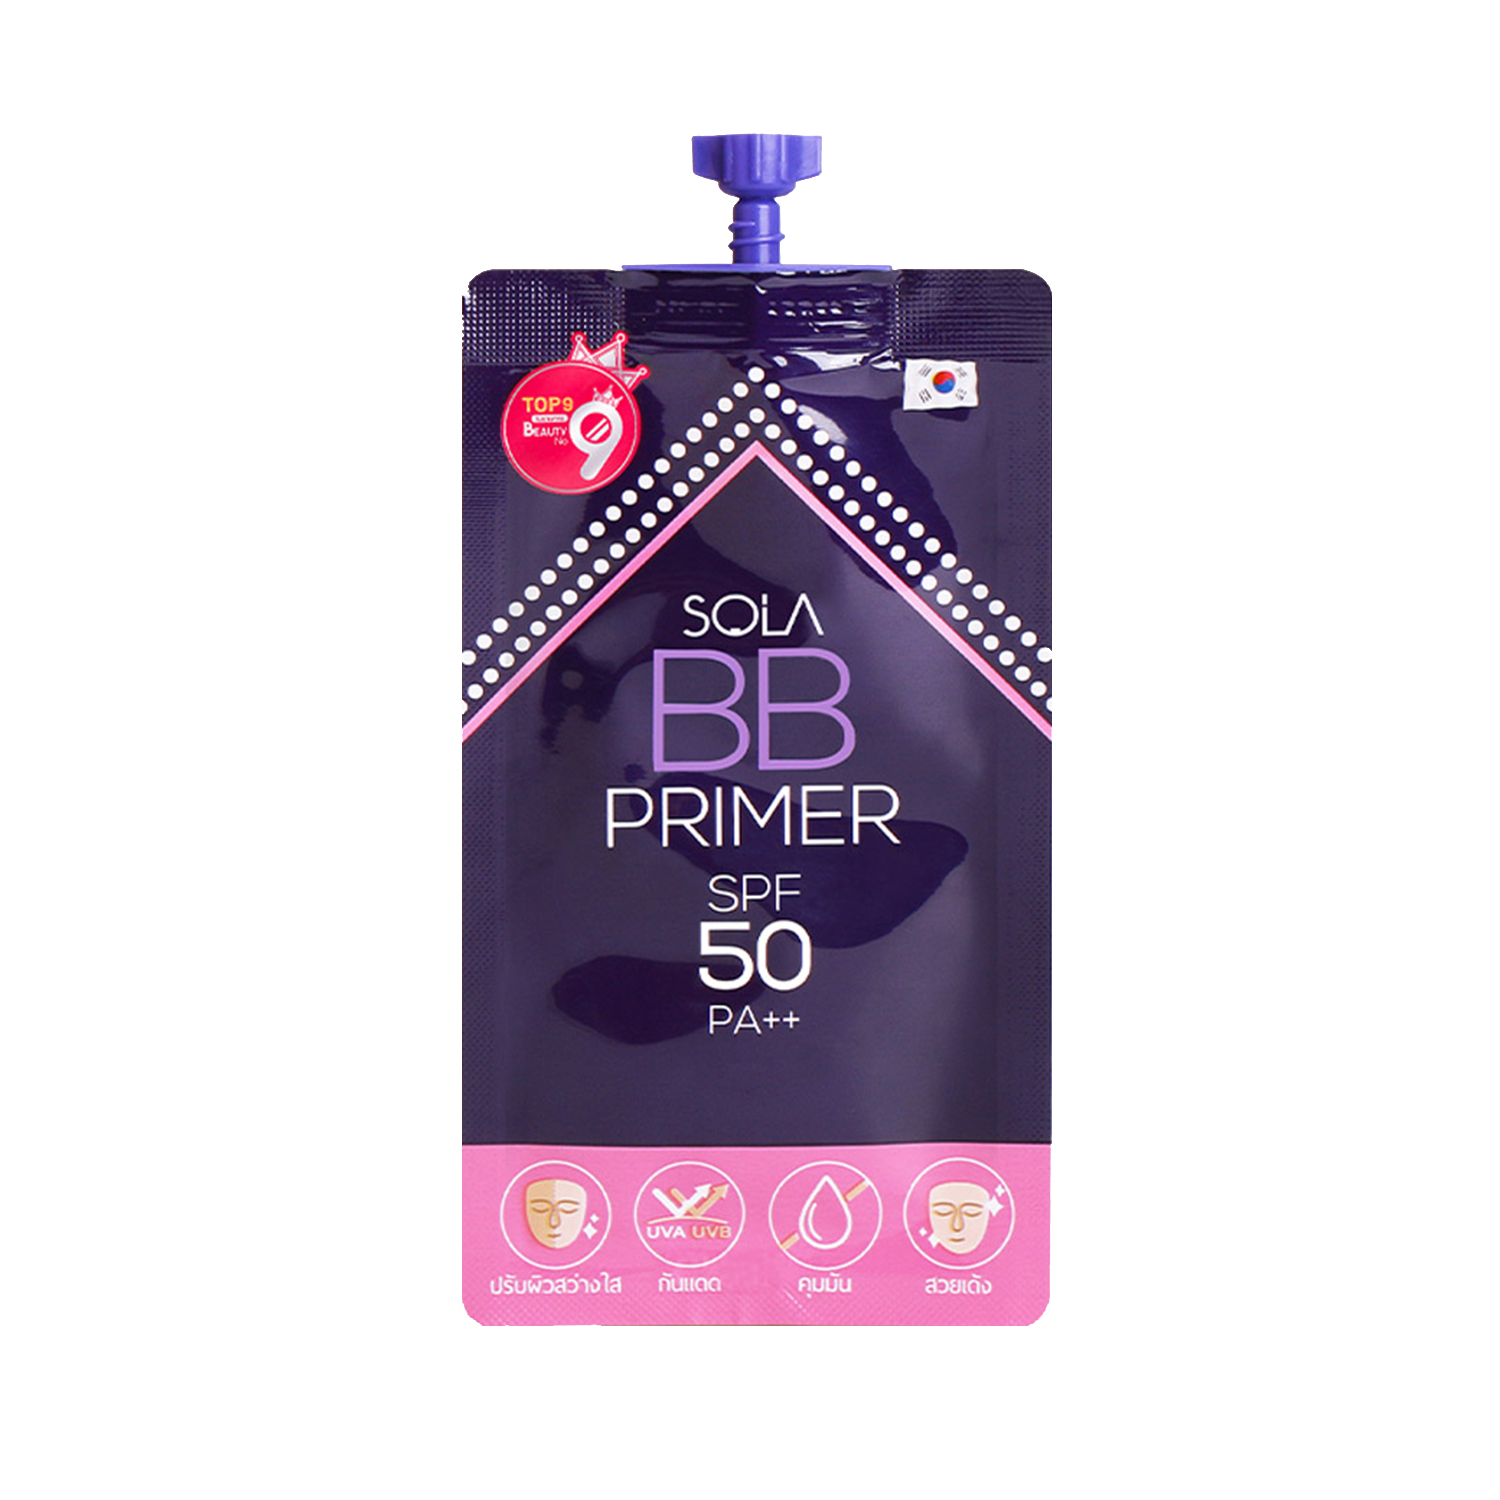 Sola BB Primer SPF 50 PA++ โซลา บีบี ไพร์เมอร์